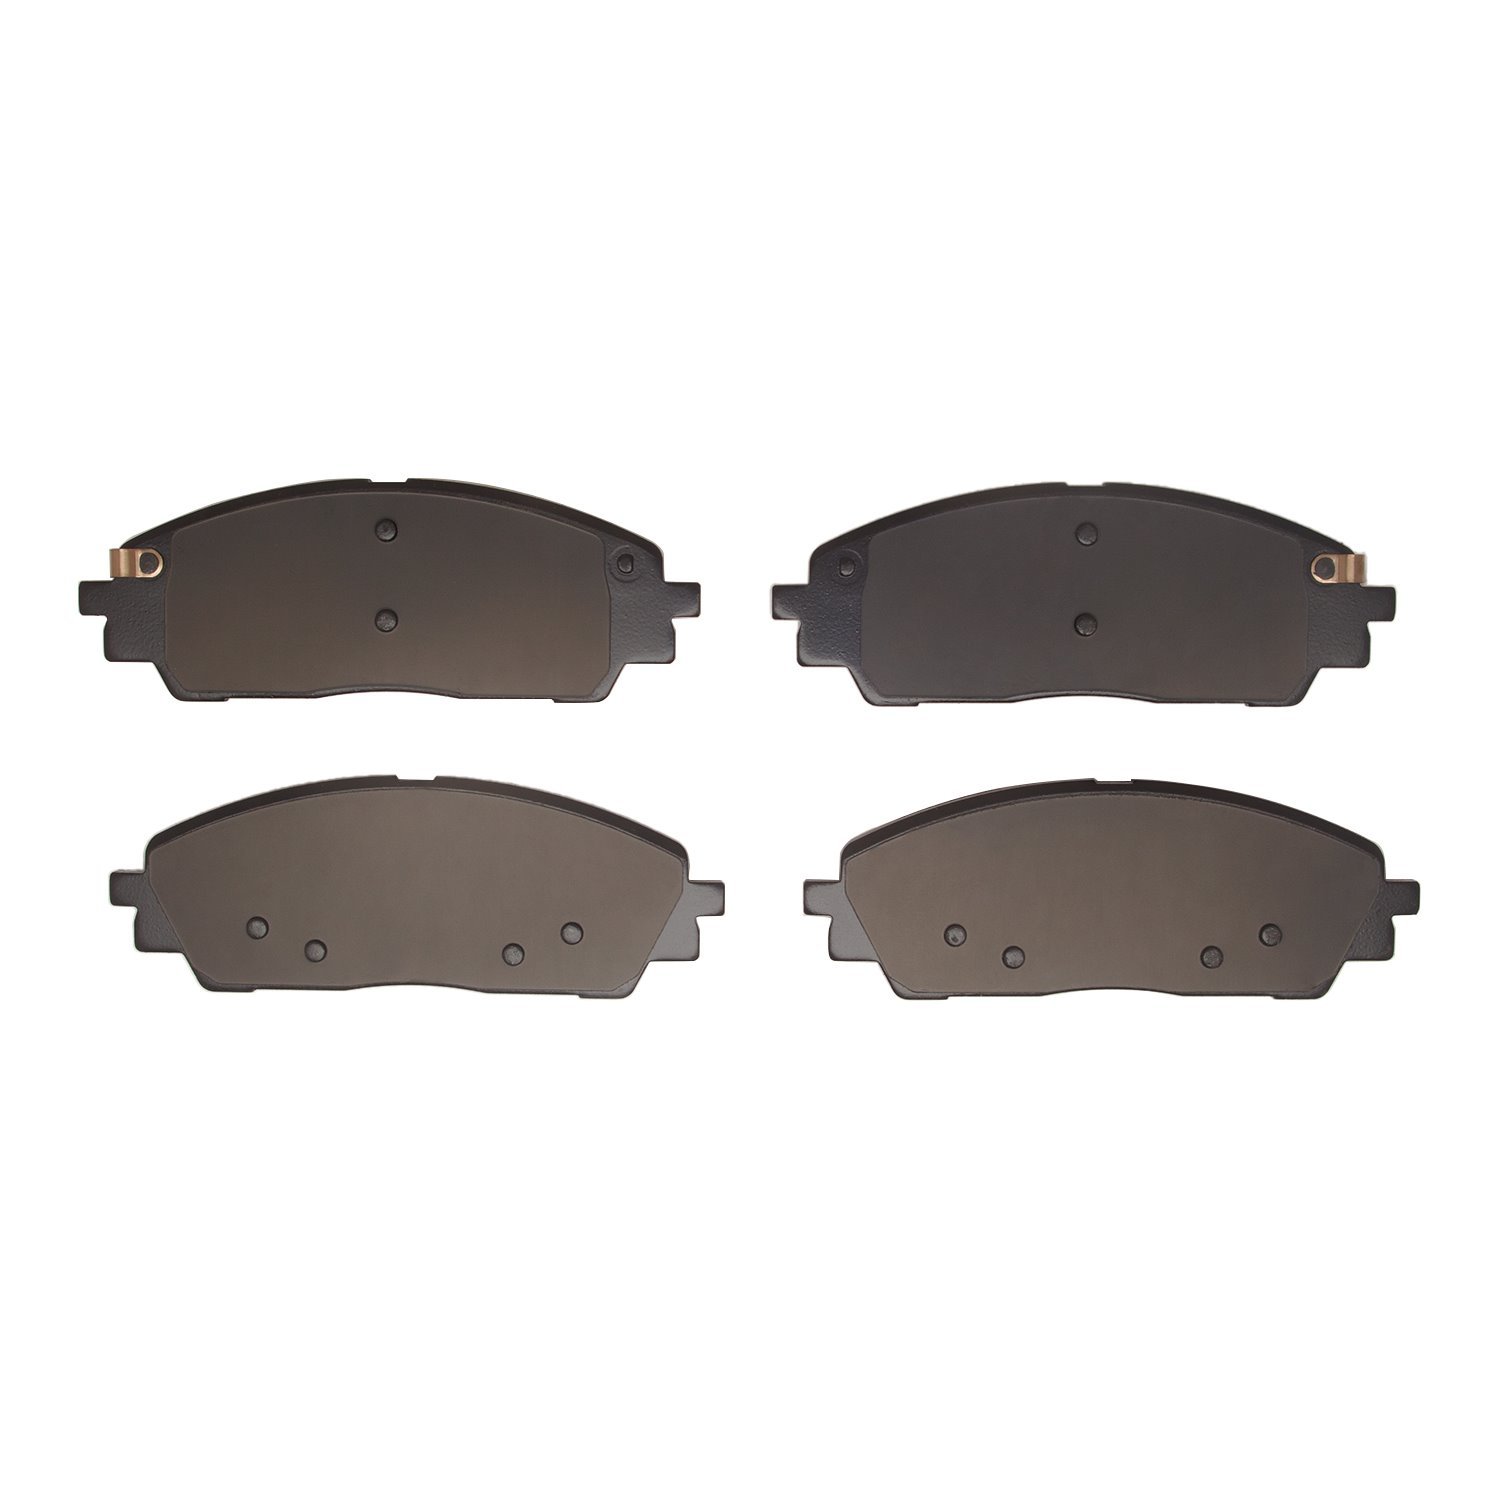 1551-2392-00 5000 Advanced Ceramic Brake Pads, Fits Select Kia/Hyundai/Genesis, Position: Front